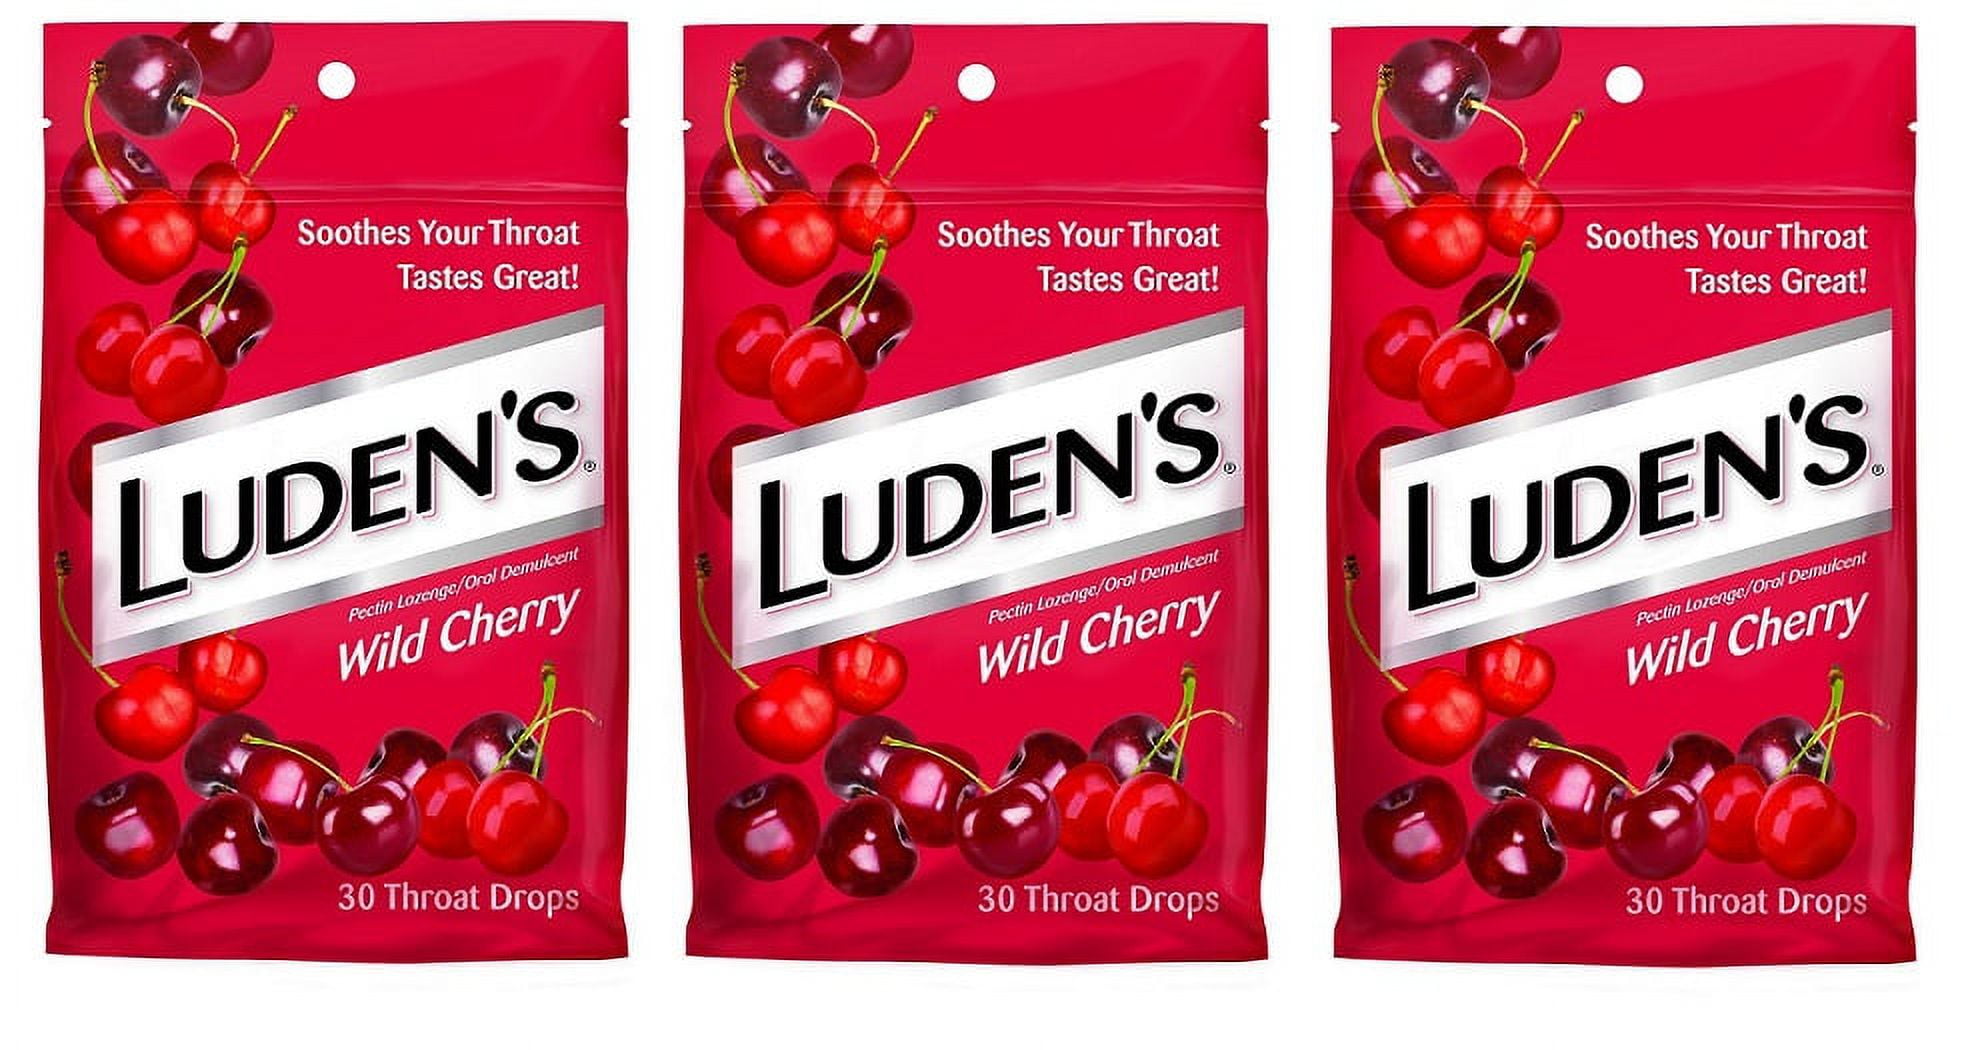 Luden's Wild Cherry Cough Drops Throat Drops 30 Count New Look